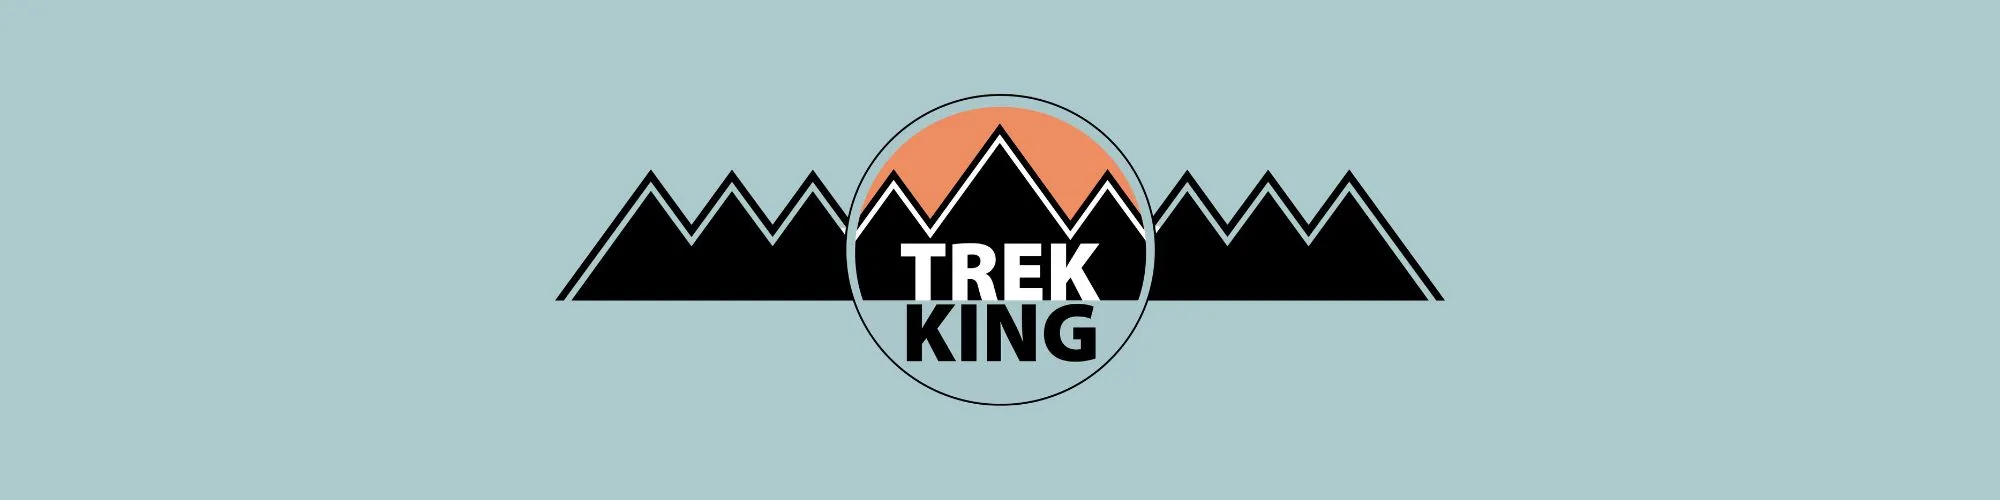 trekking schuhe logo